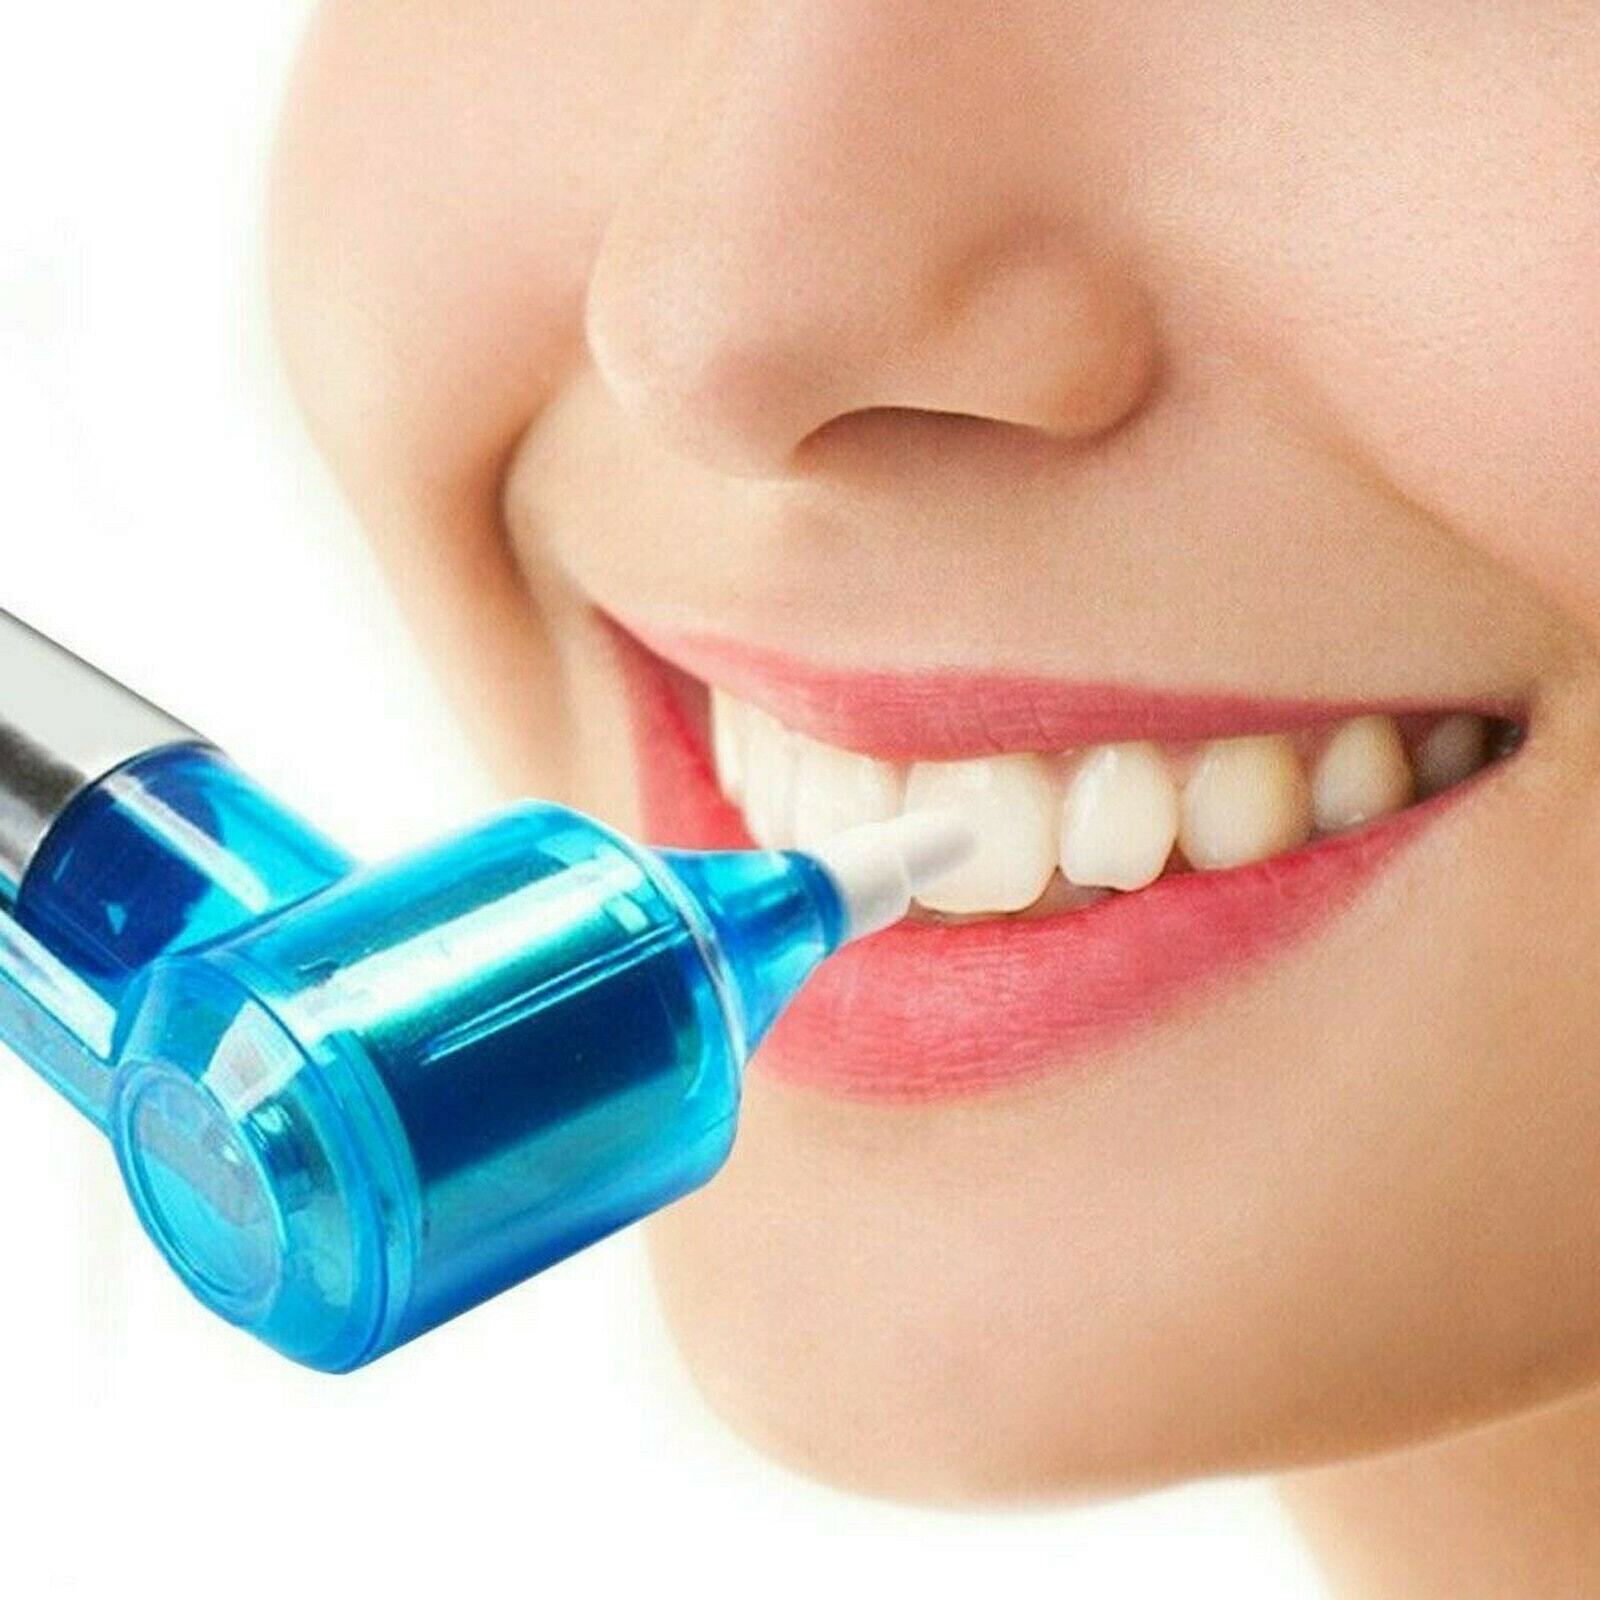 Teeth Polisher Tooth Cleaning at Home  - Dentelio™ Teeth Whitening Dentelio™ Zaavio®